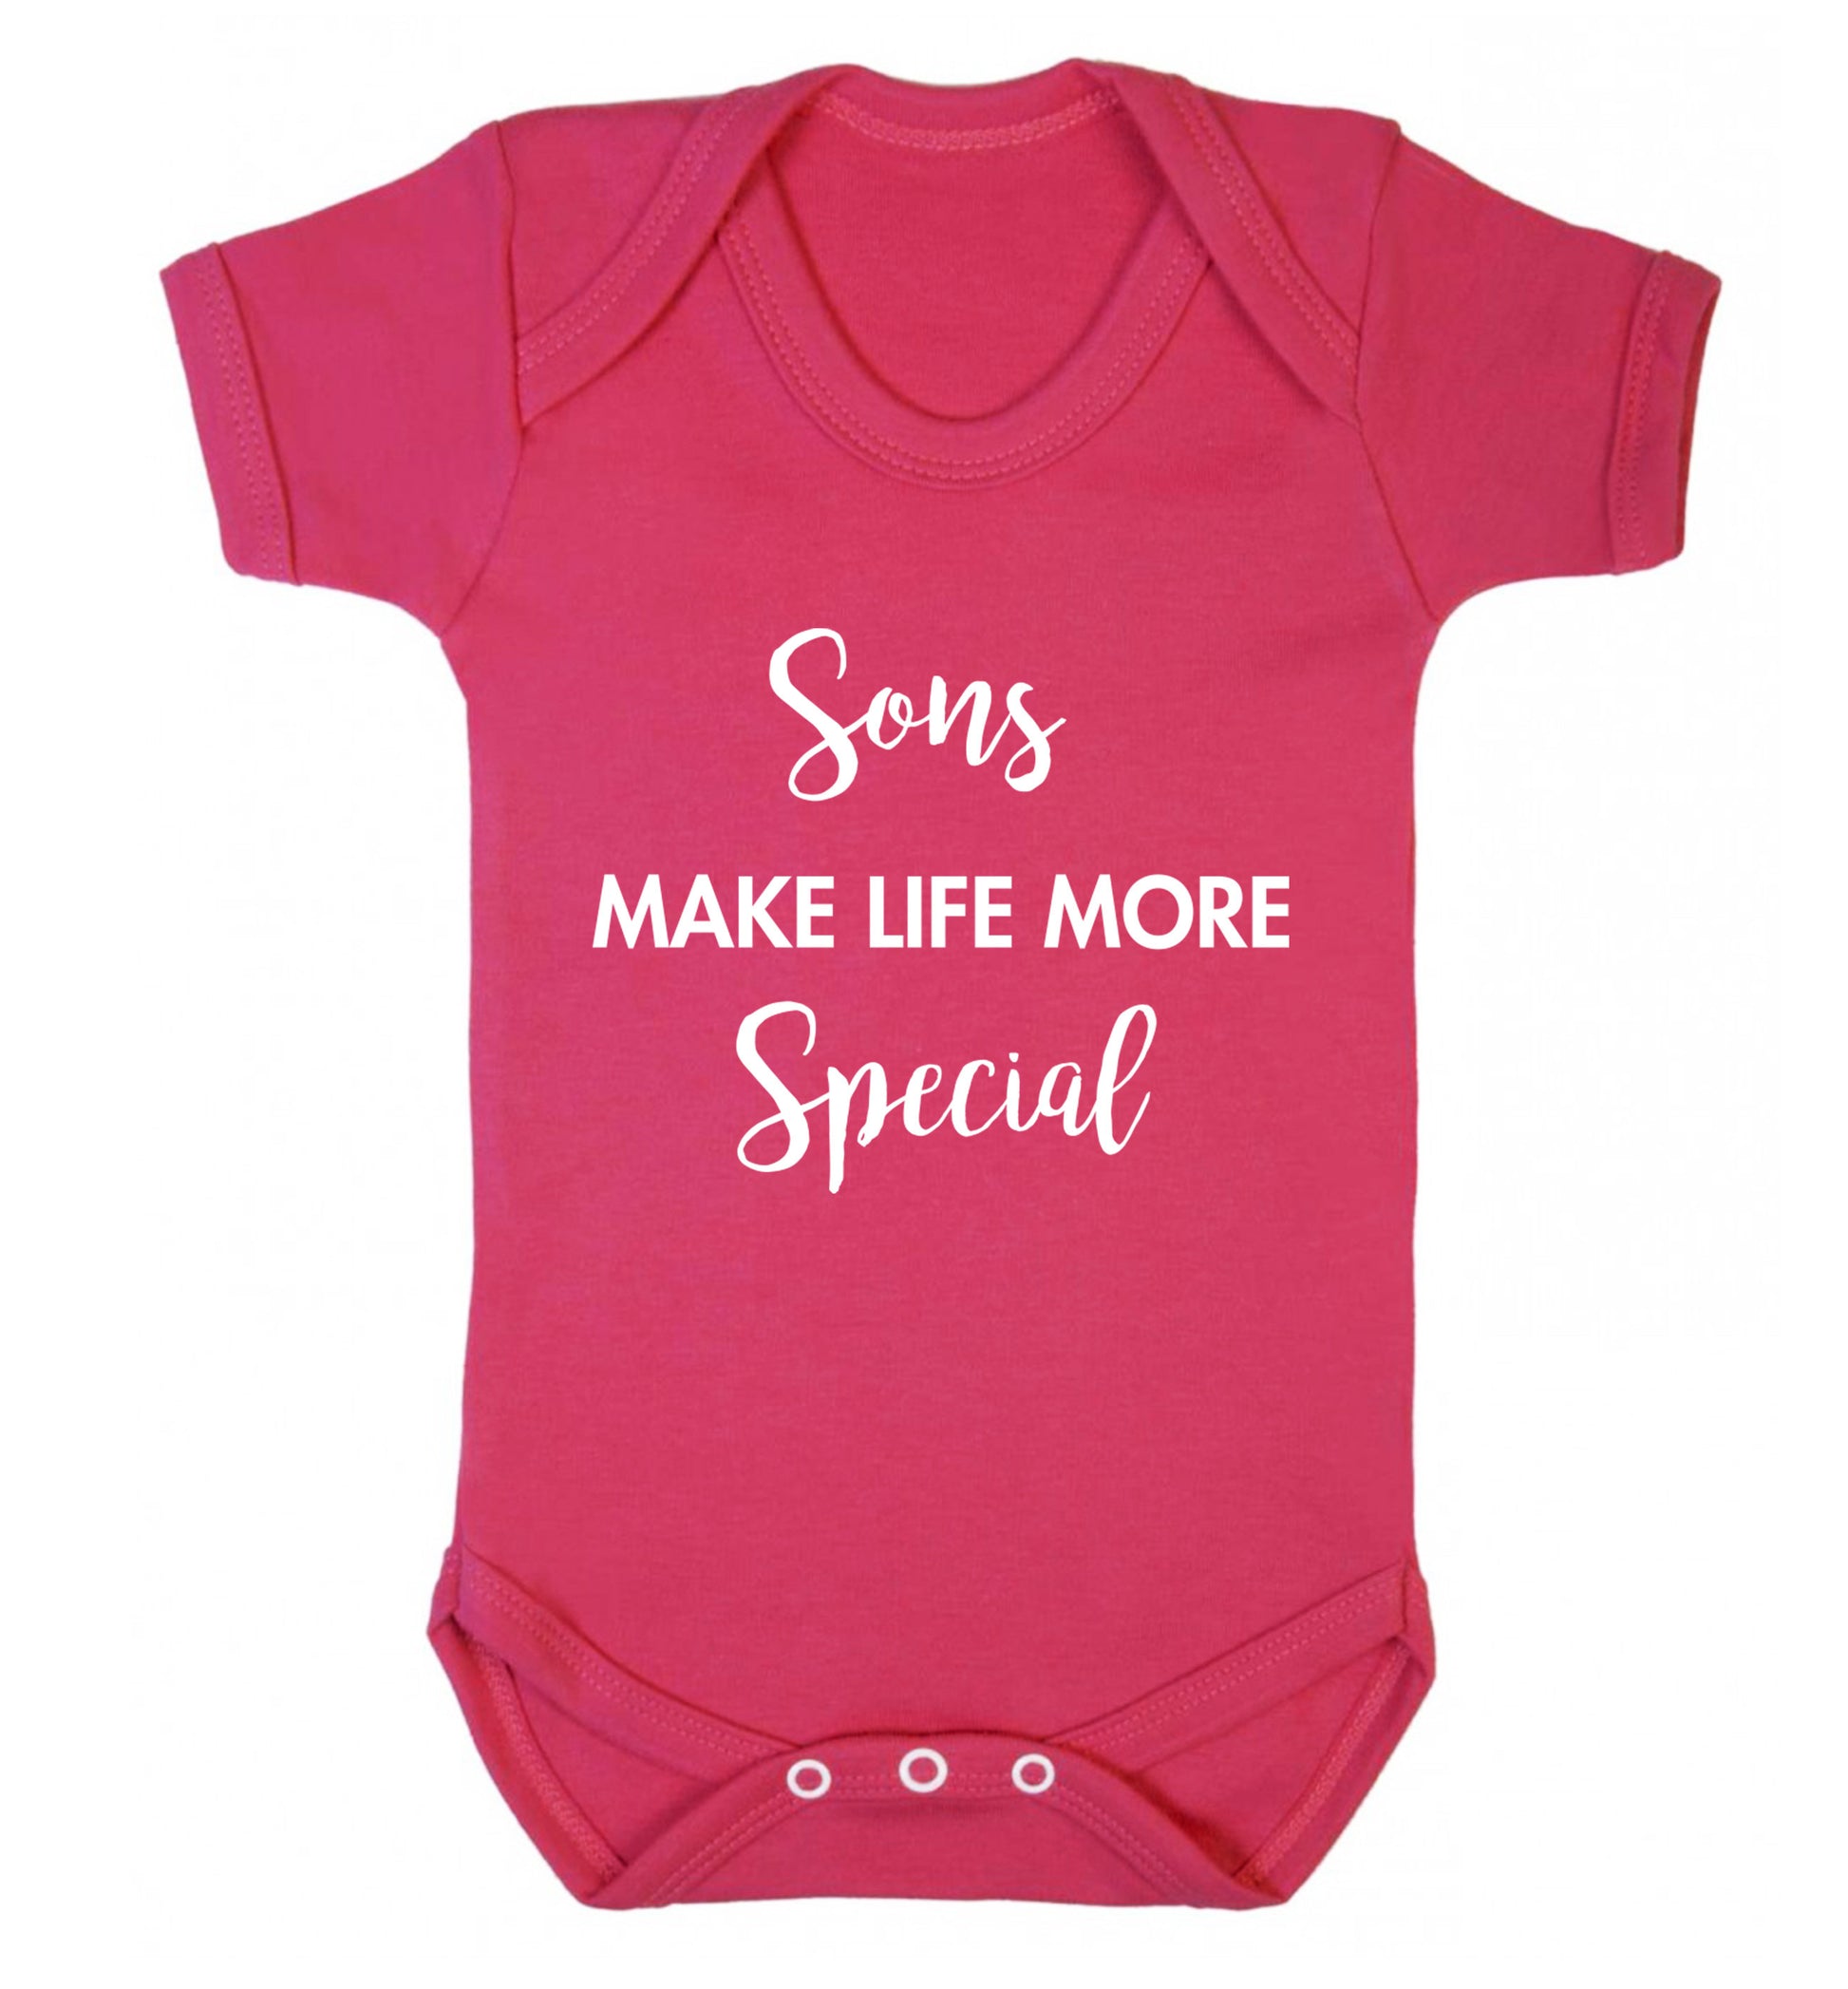 Sons make life more special Baby Vest dark pink 18-24 months